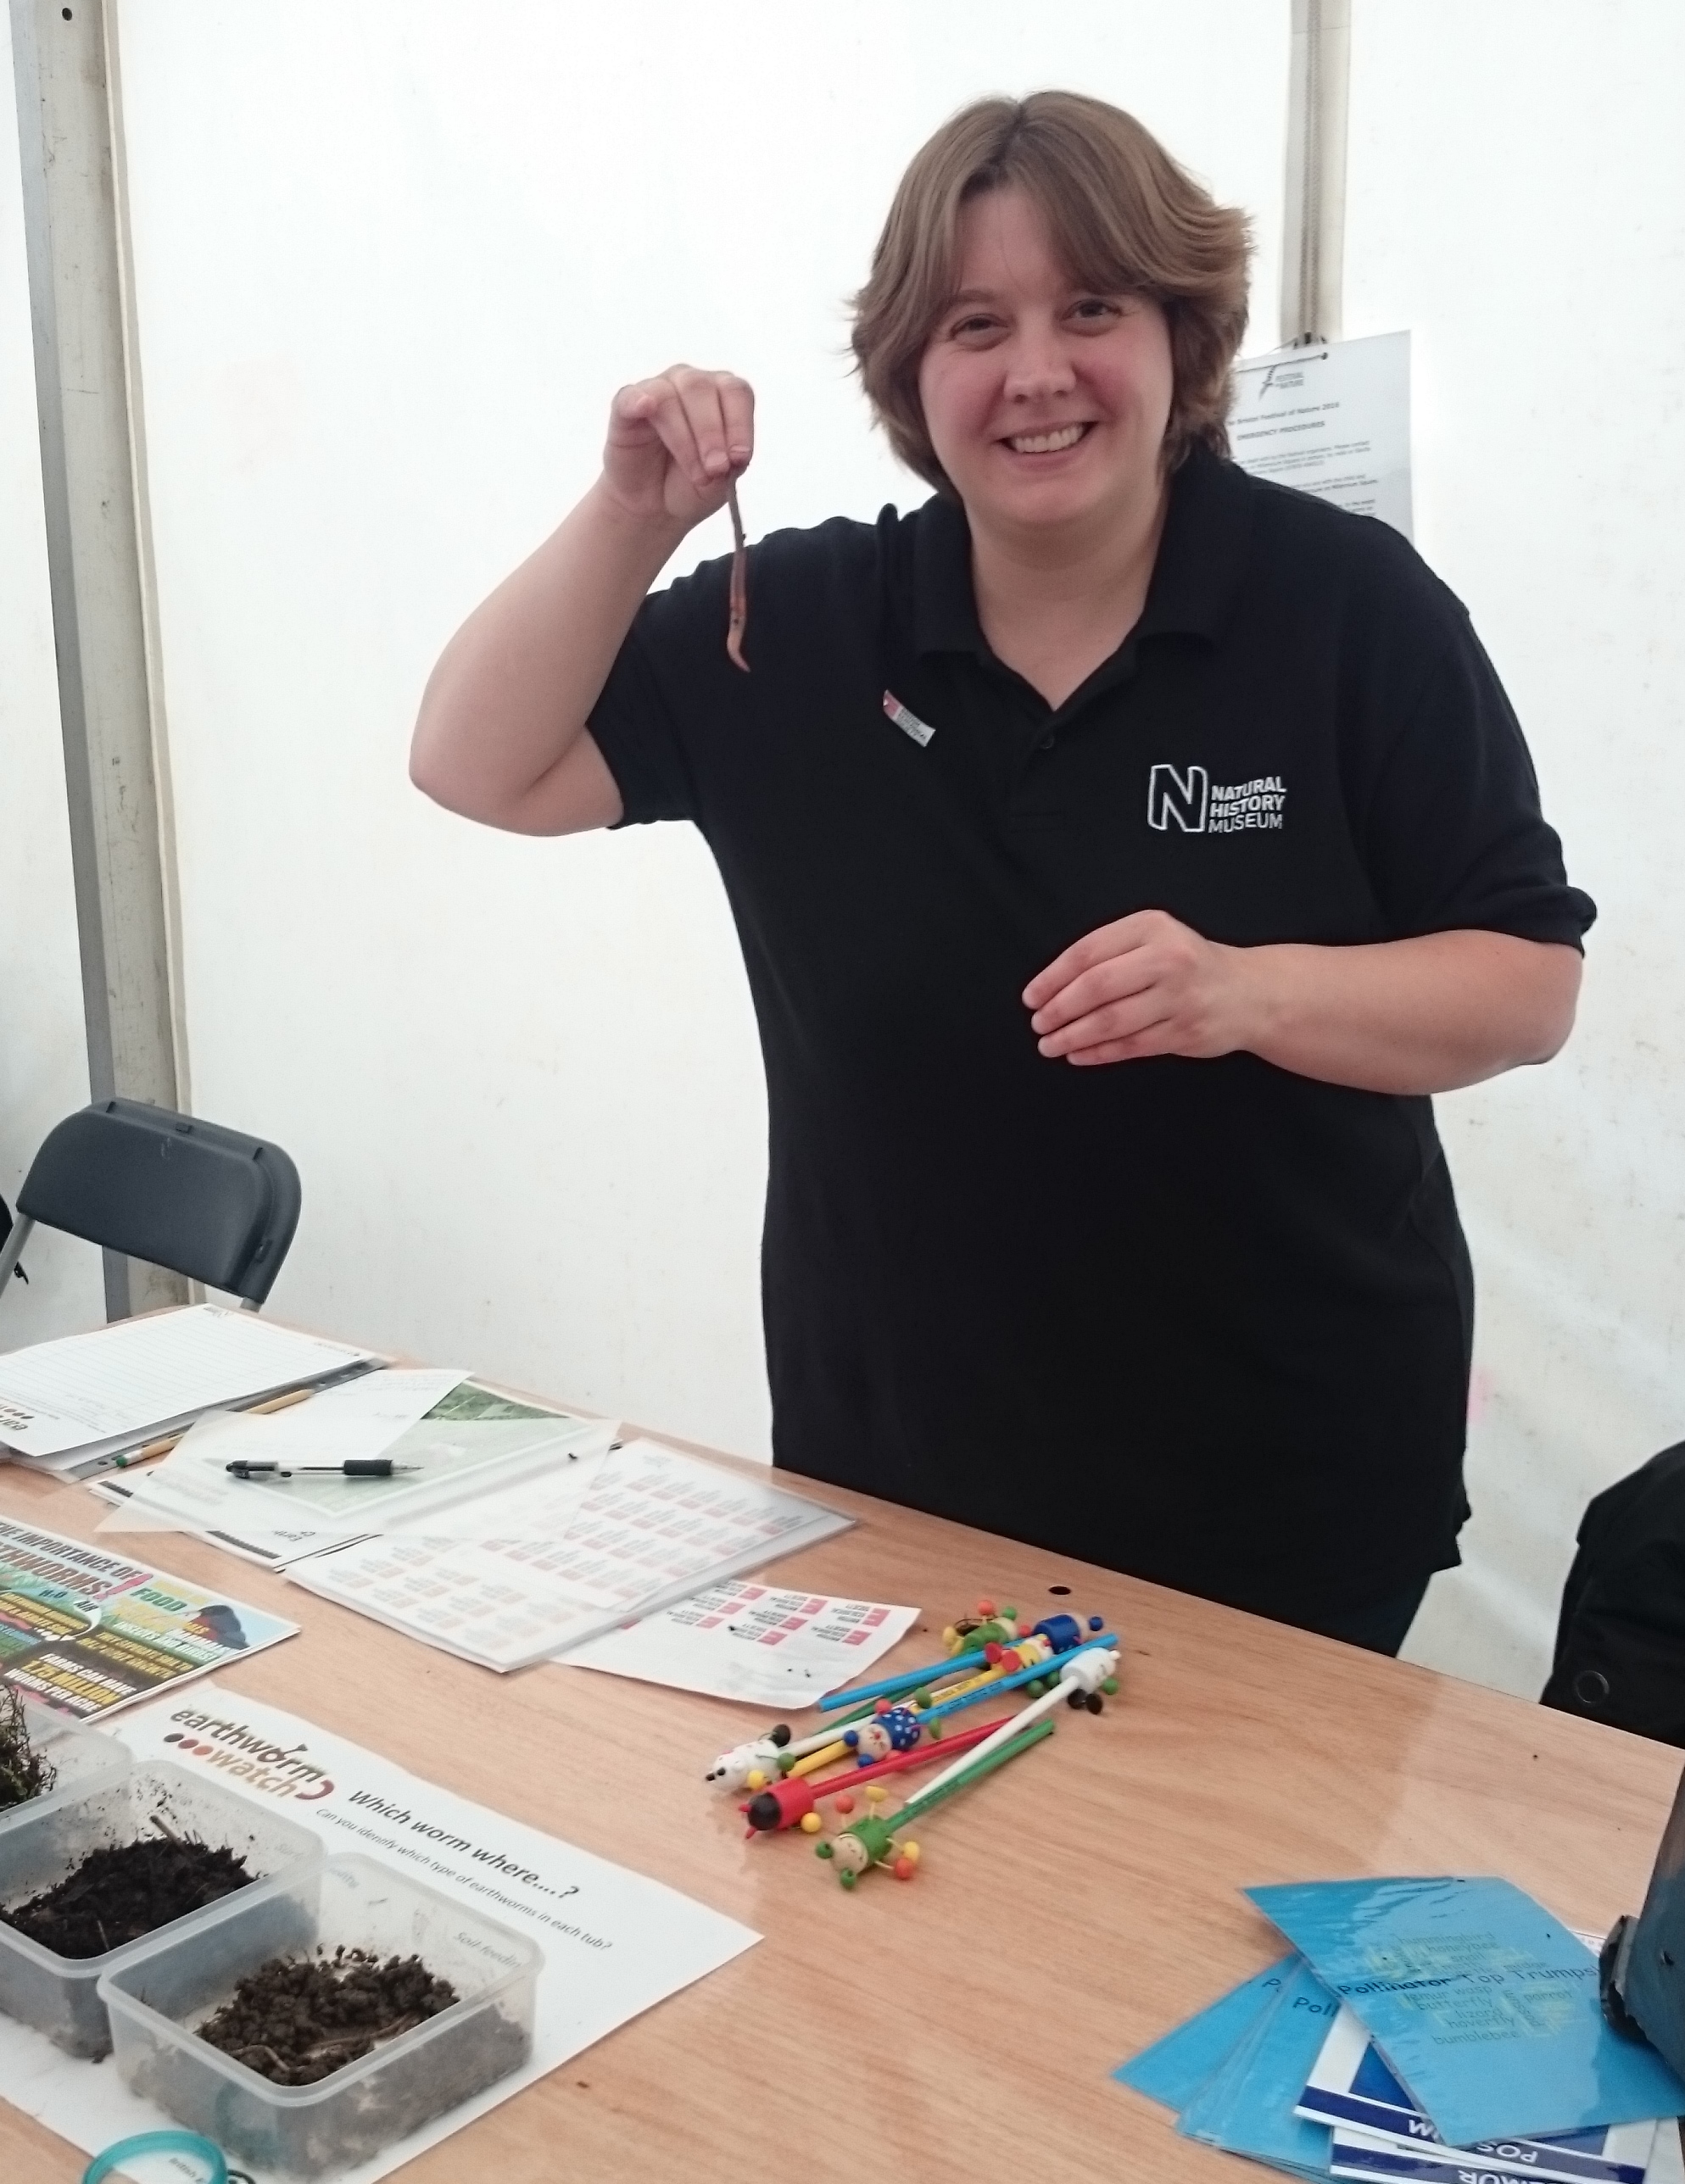 Earthworm Watch scientist Victoria Burton at the Bristol Festival of Nature